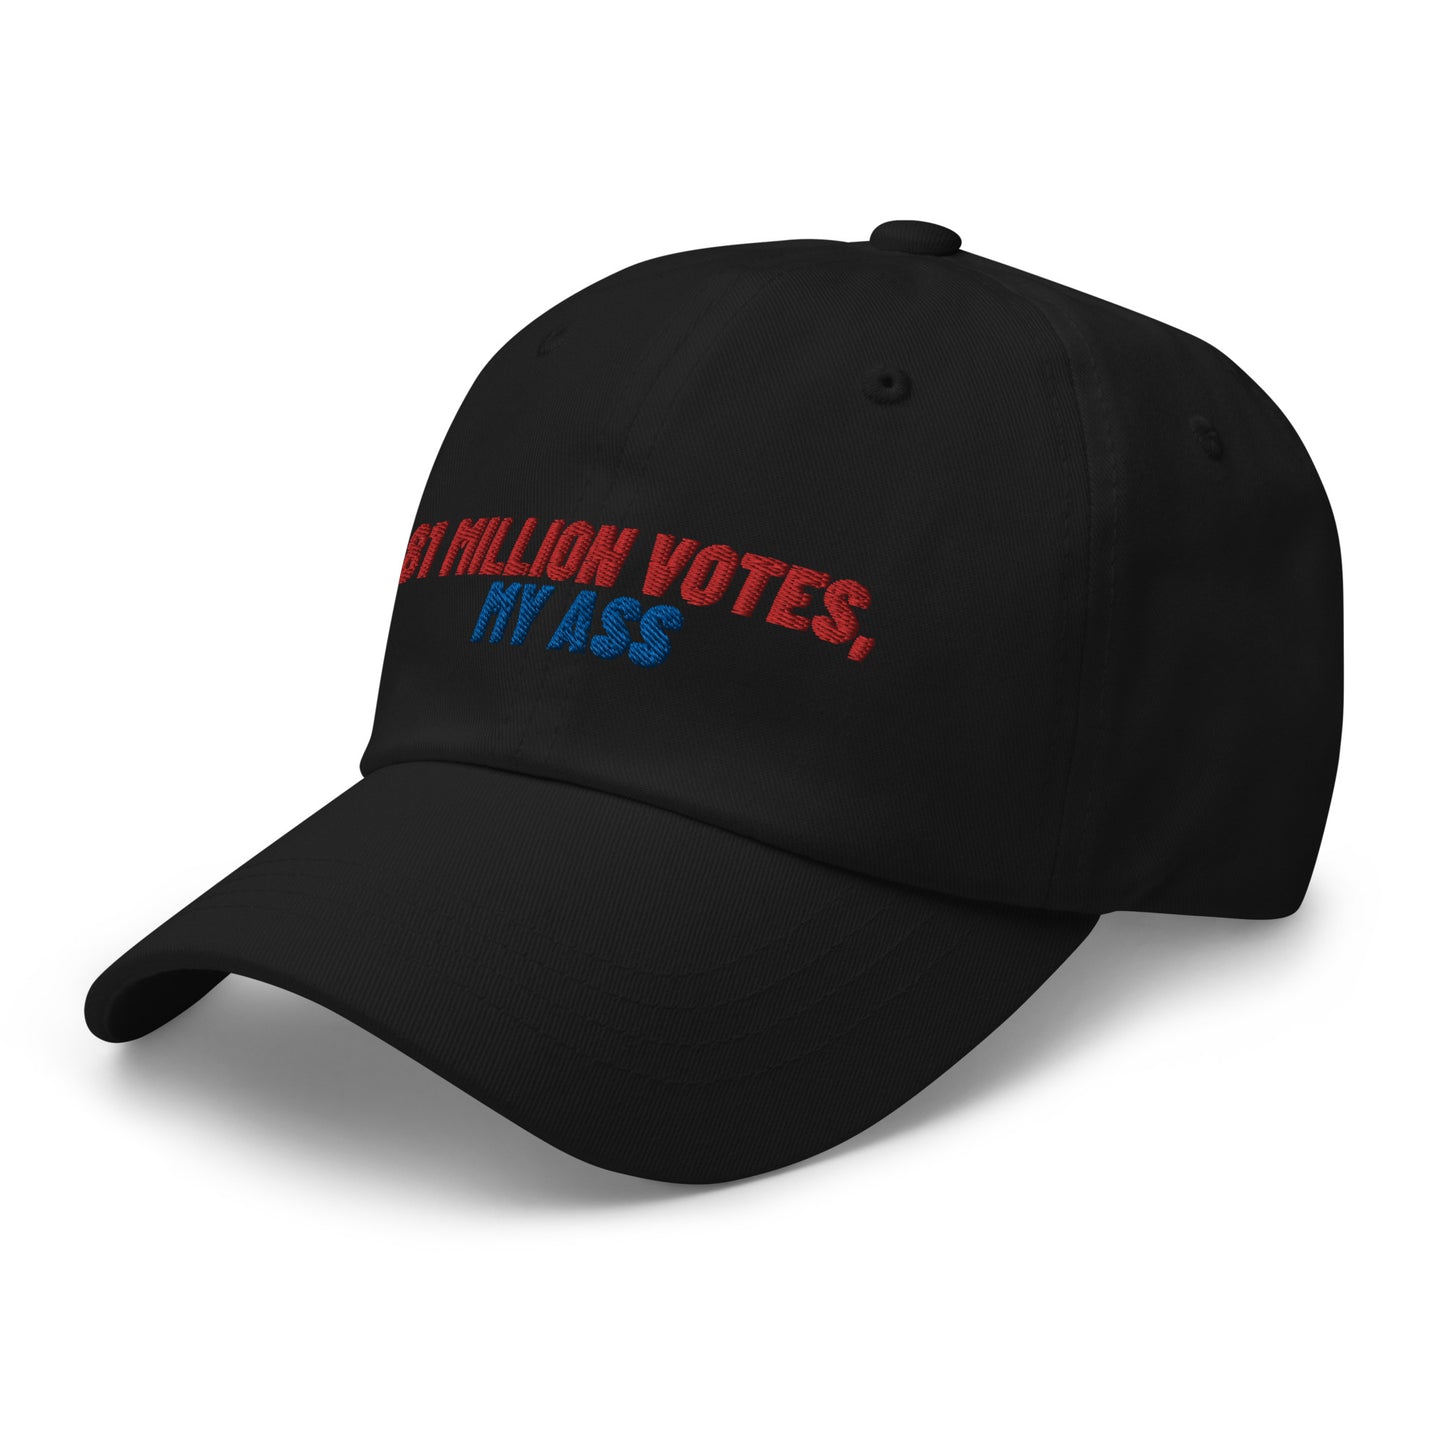 81 Million Votes, My Ass Hat (Black)